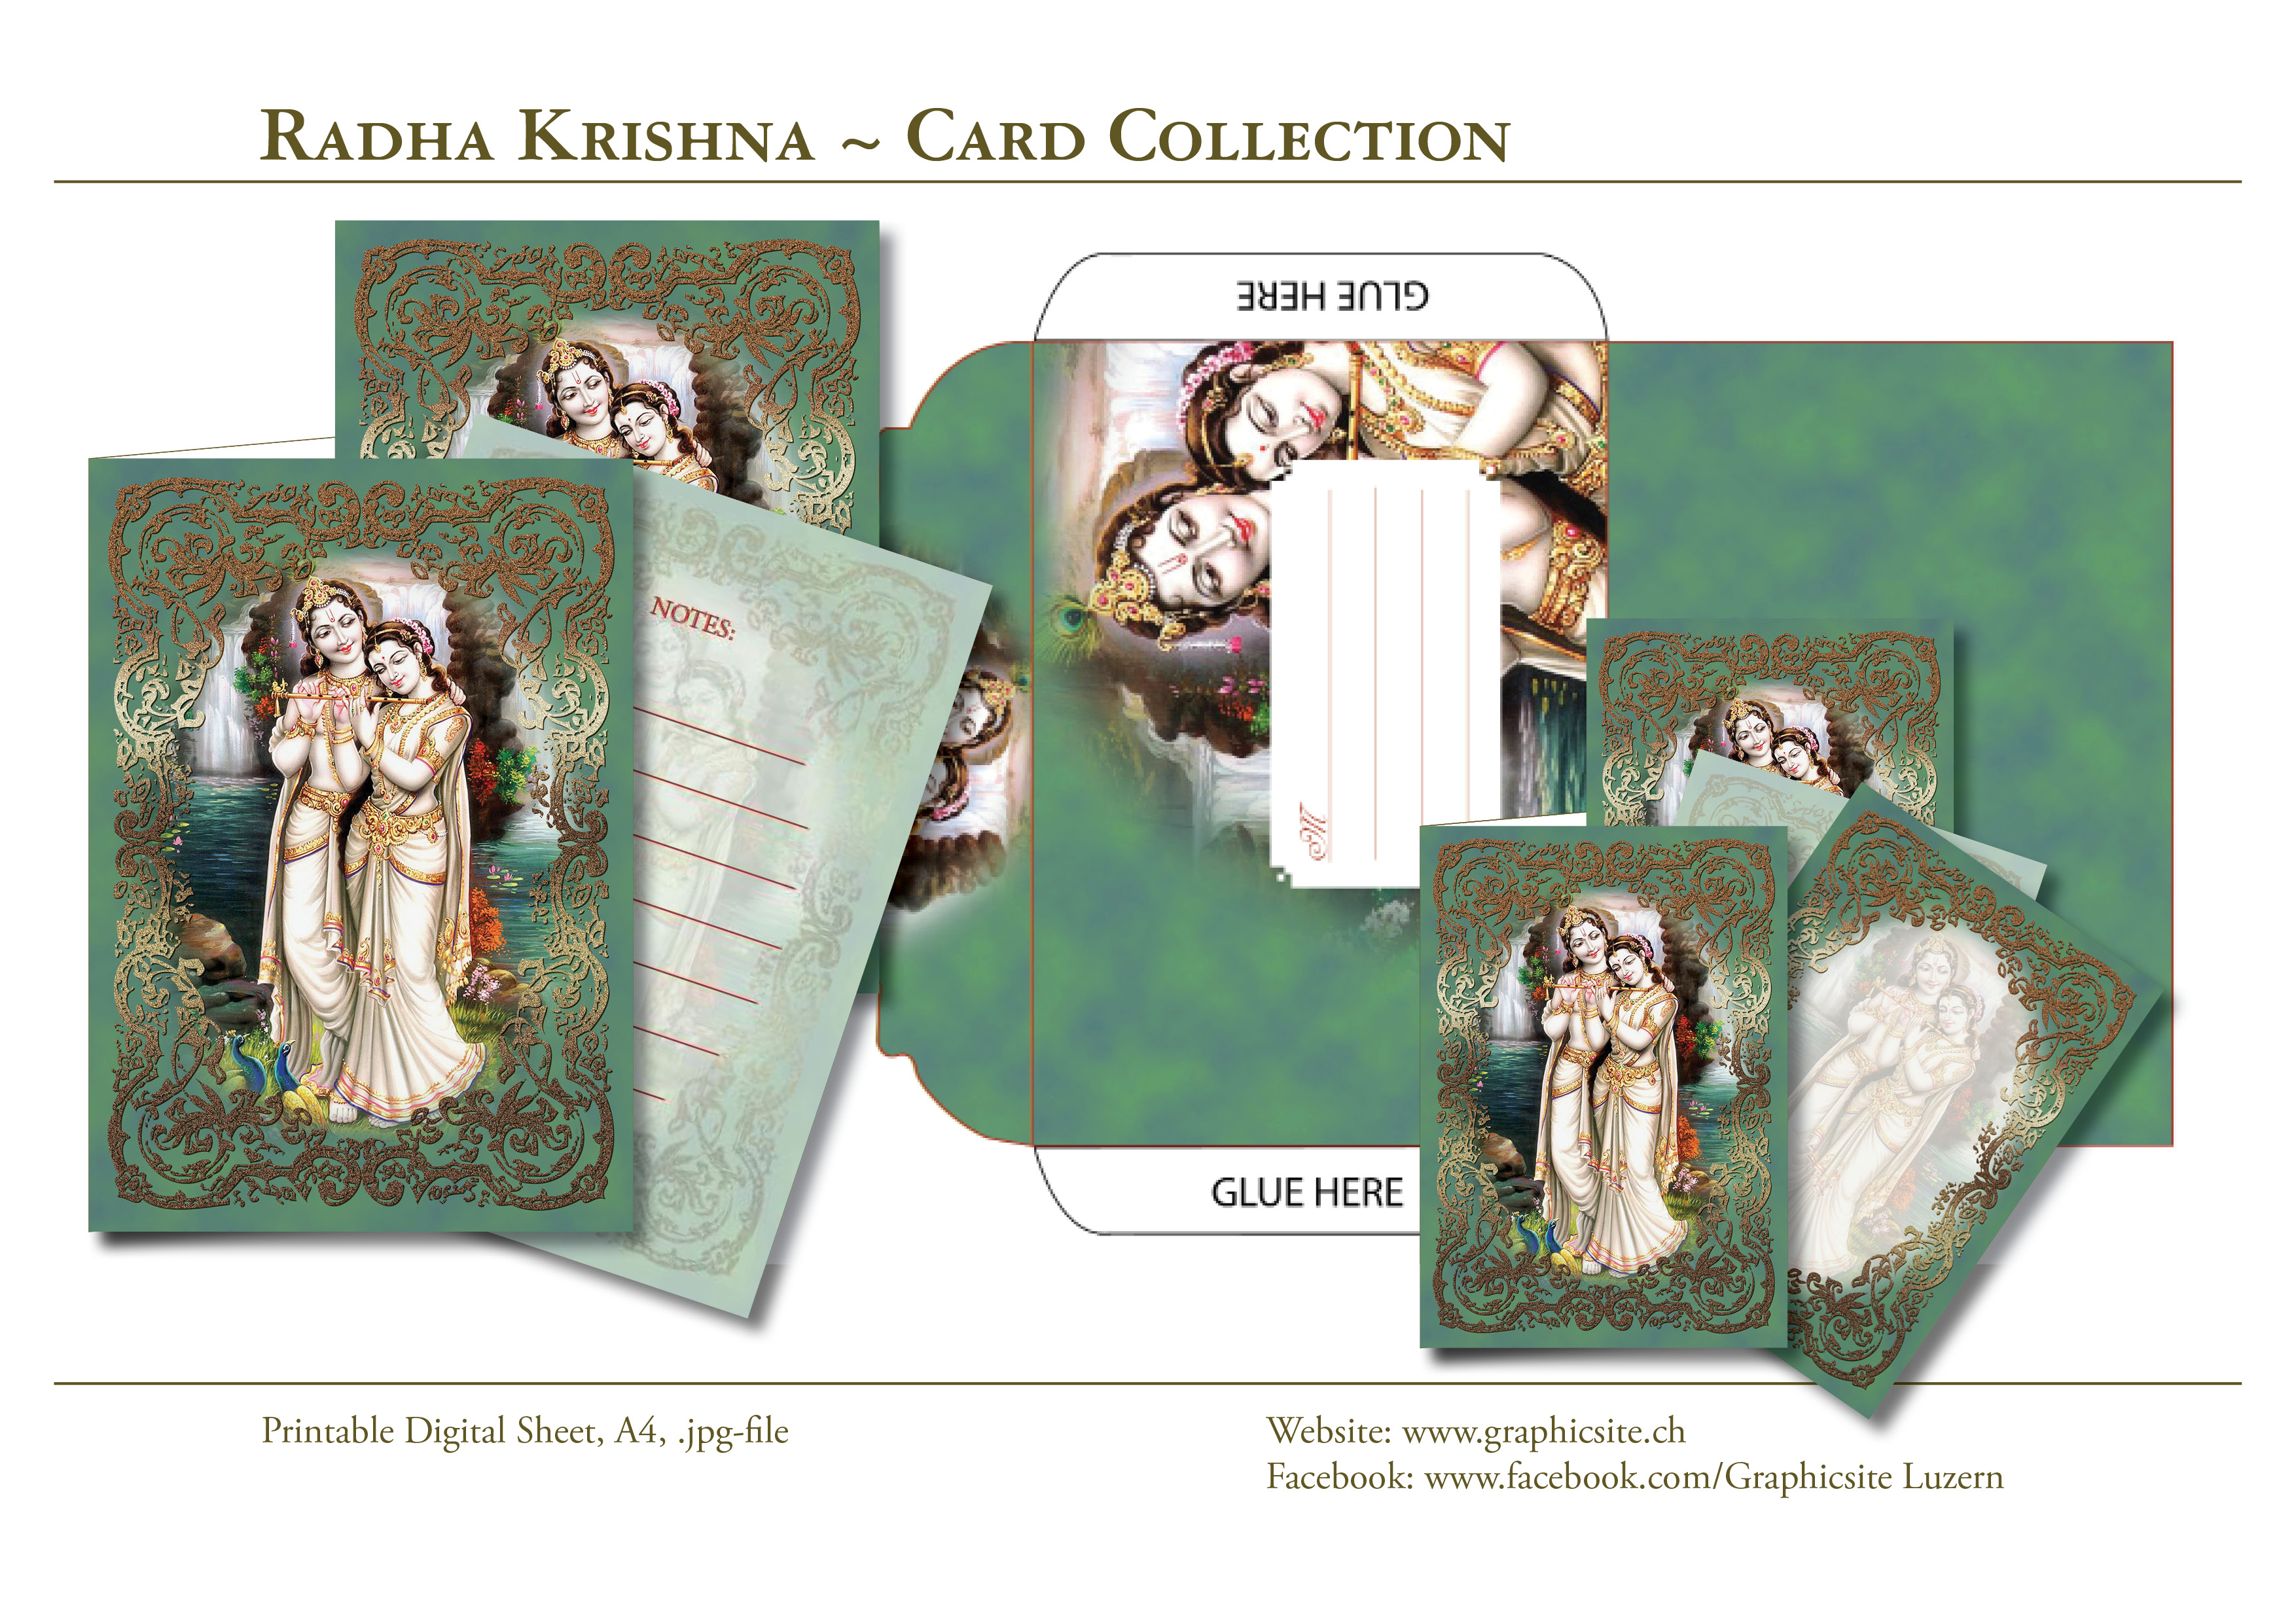 Printable Digital Sheets - DIN A Format - RhadaKrishna Card Collection - Graphic Design Luzern, Schweiz